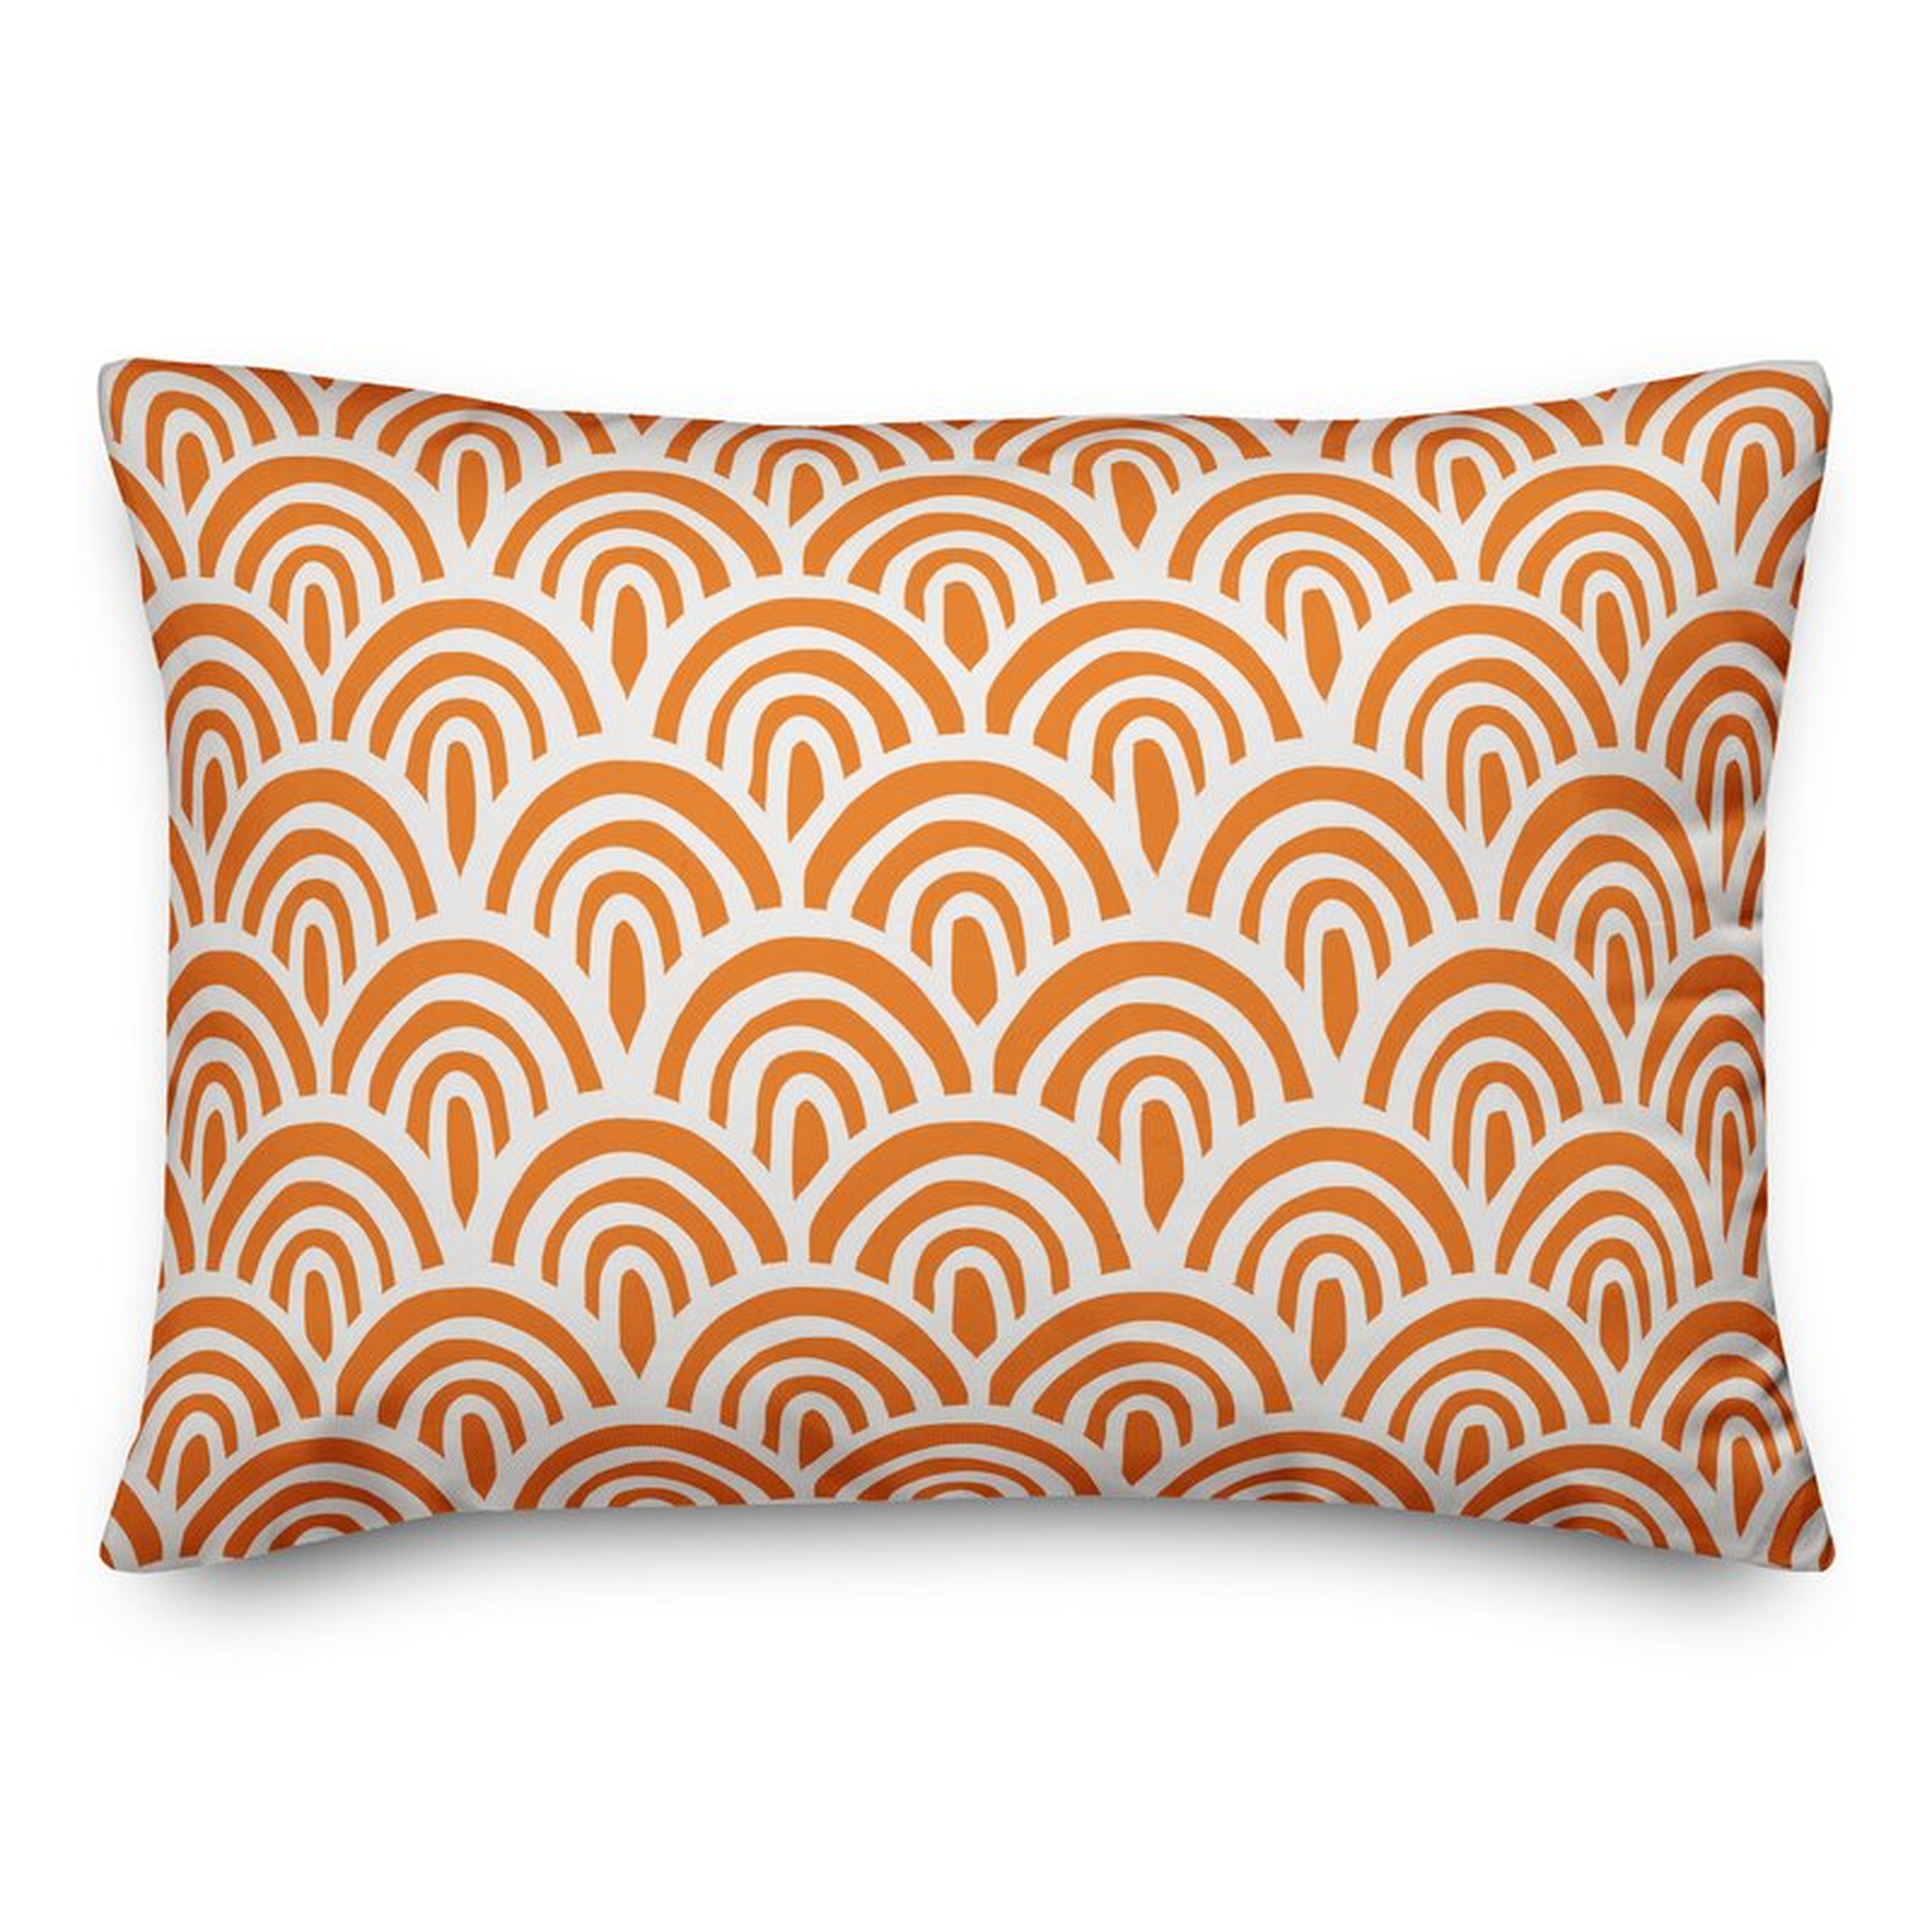 Mcclung Abstract Scallop Outdoor Rectangular Pillow Cover - Wayfair